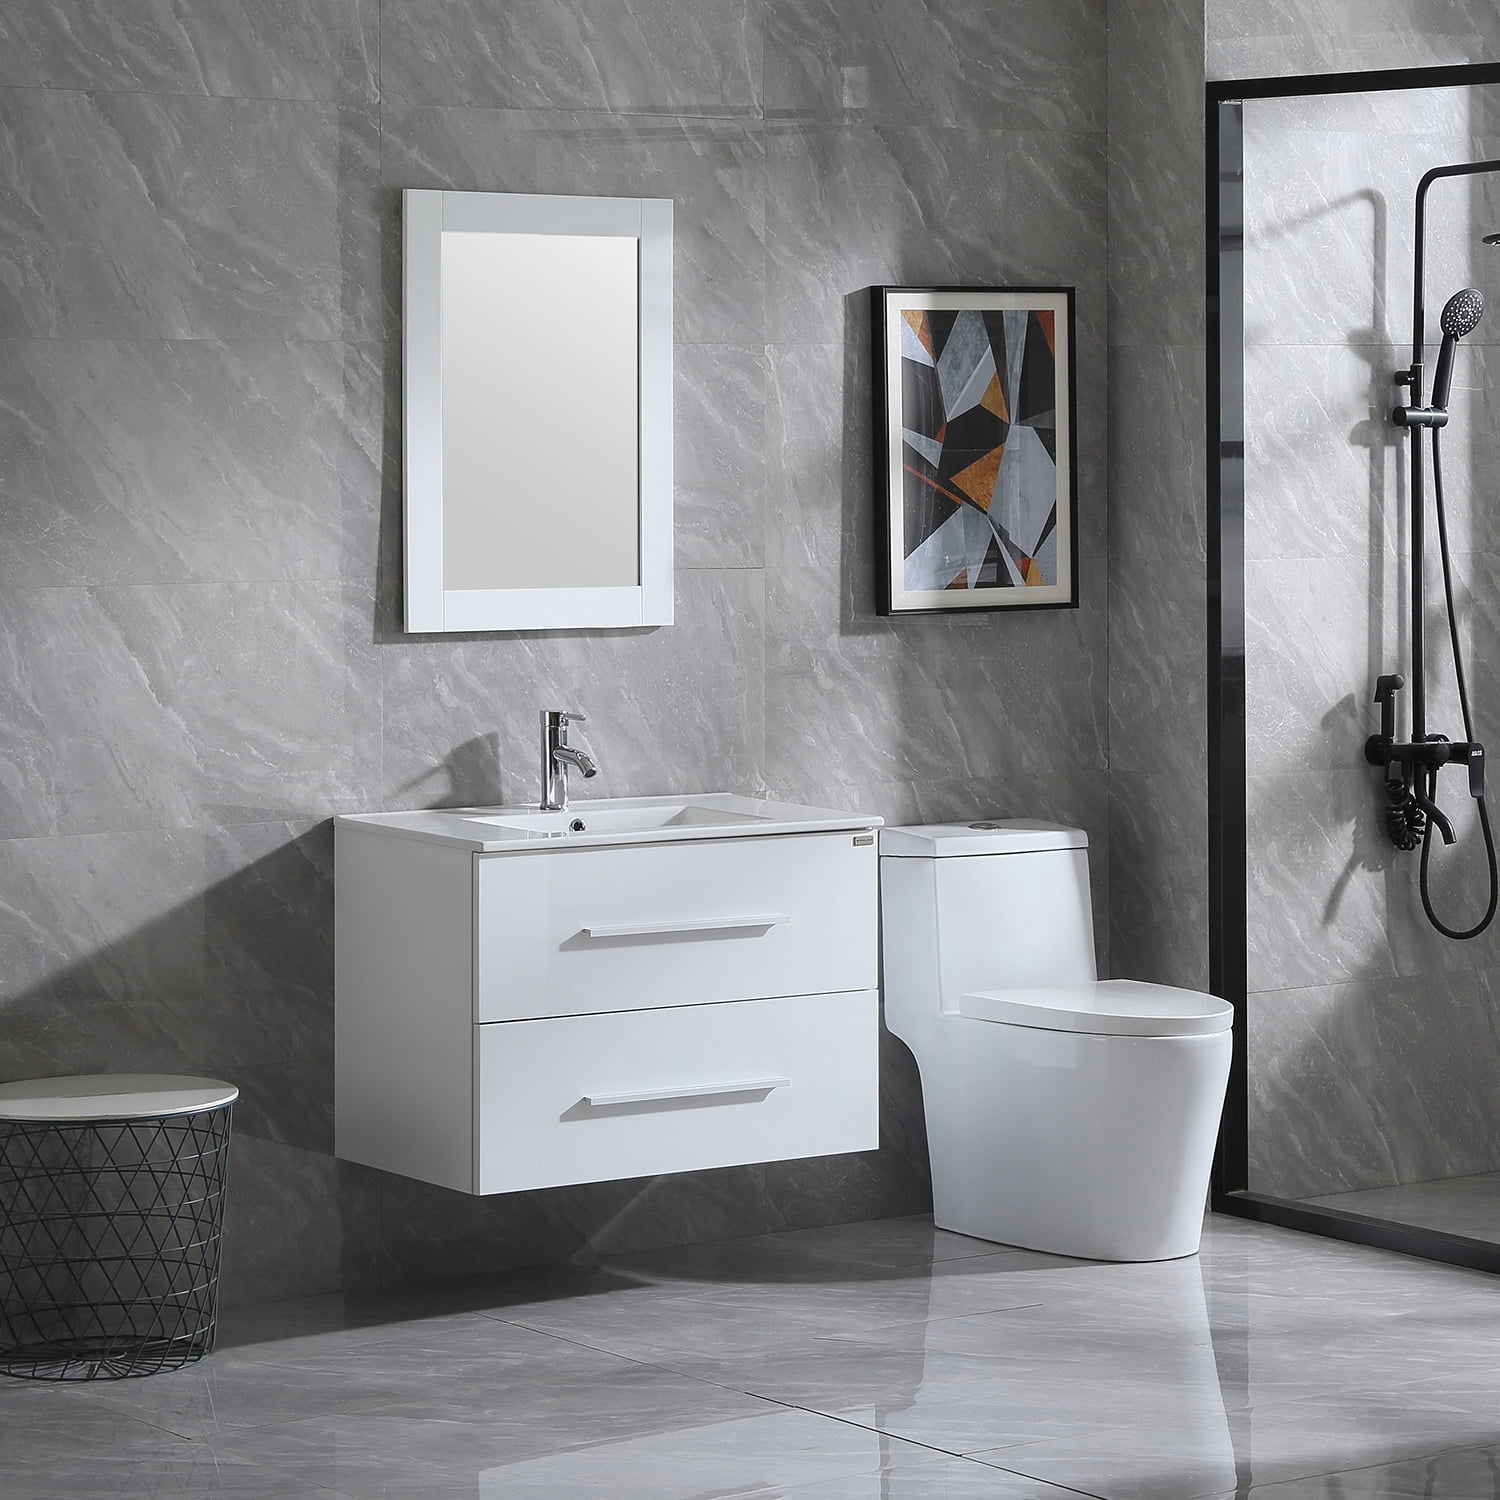 16" Bathroom Vanity Wall-Mounted Vanity Cabinet Combo Ceramic Countertop Sink 